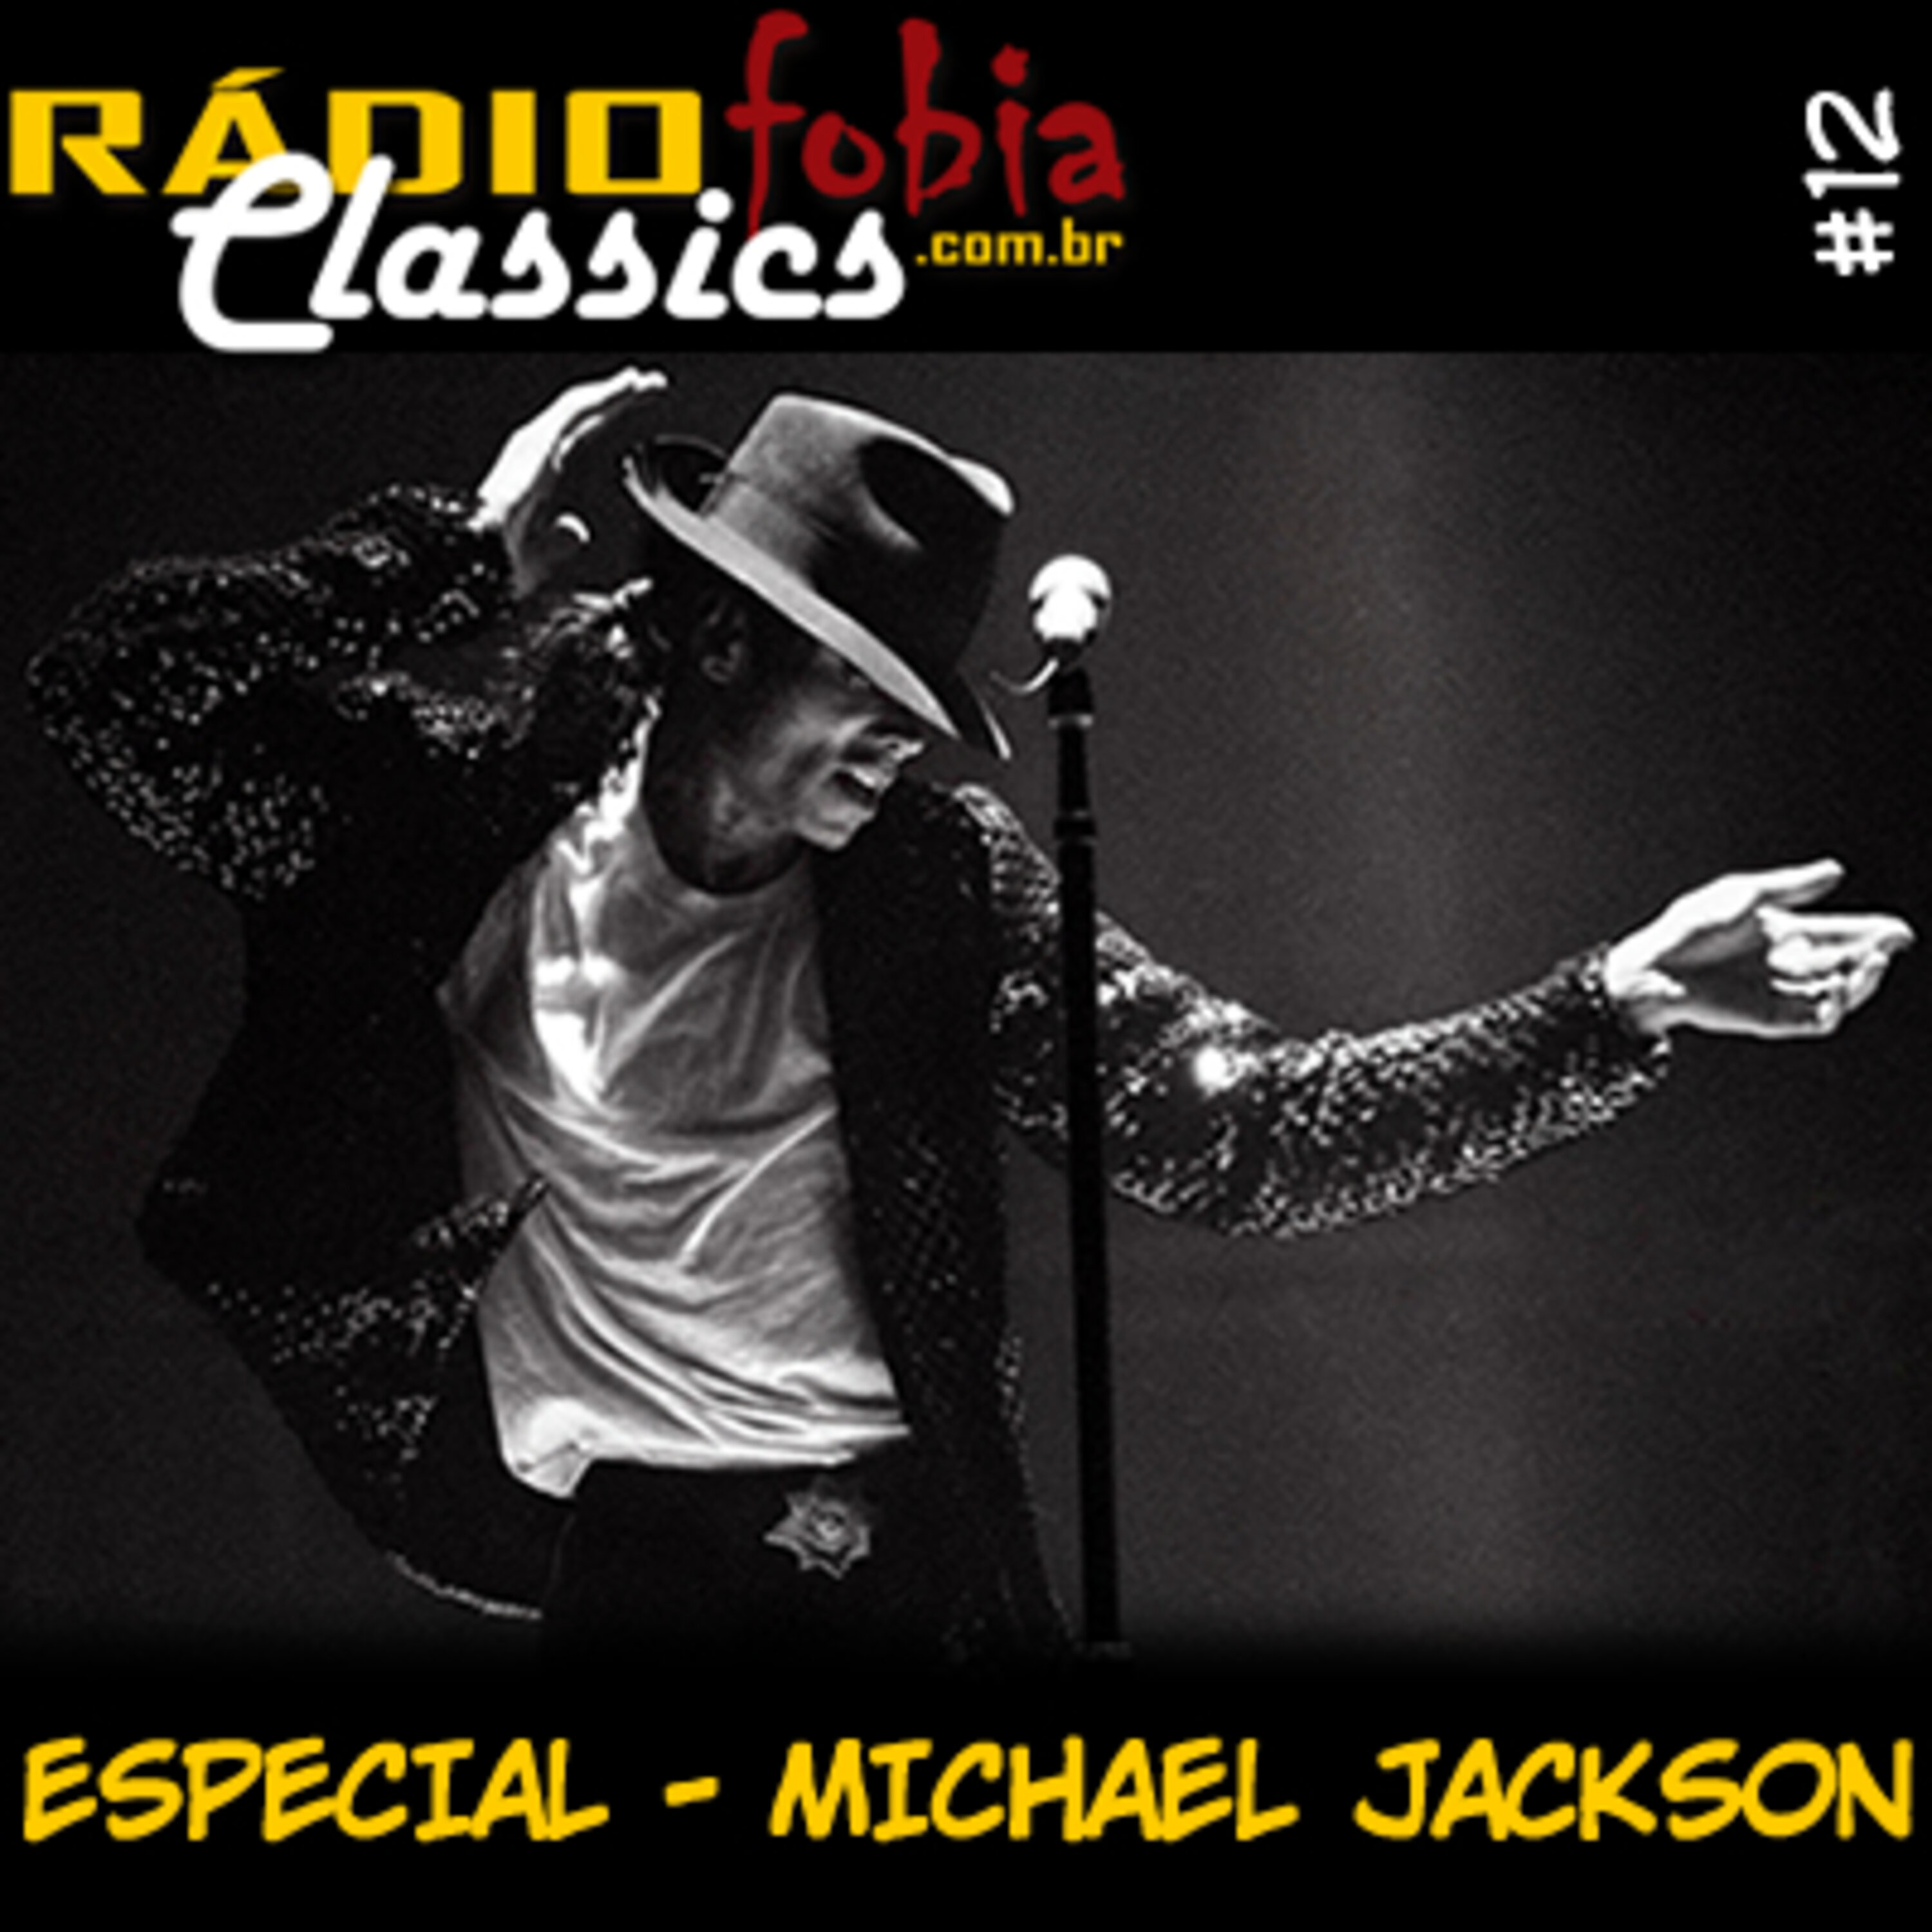 RÁDIOFOBIA Classics #12 – ESPECIAL – Michael Jackson